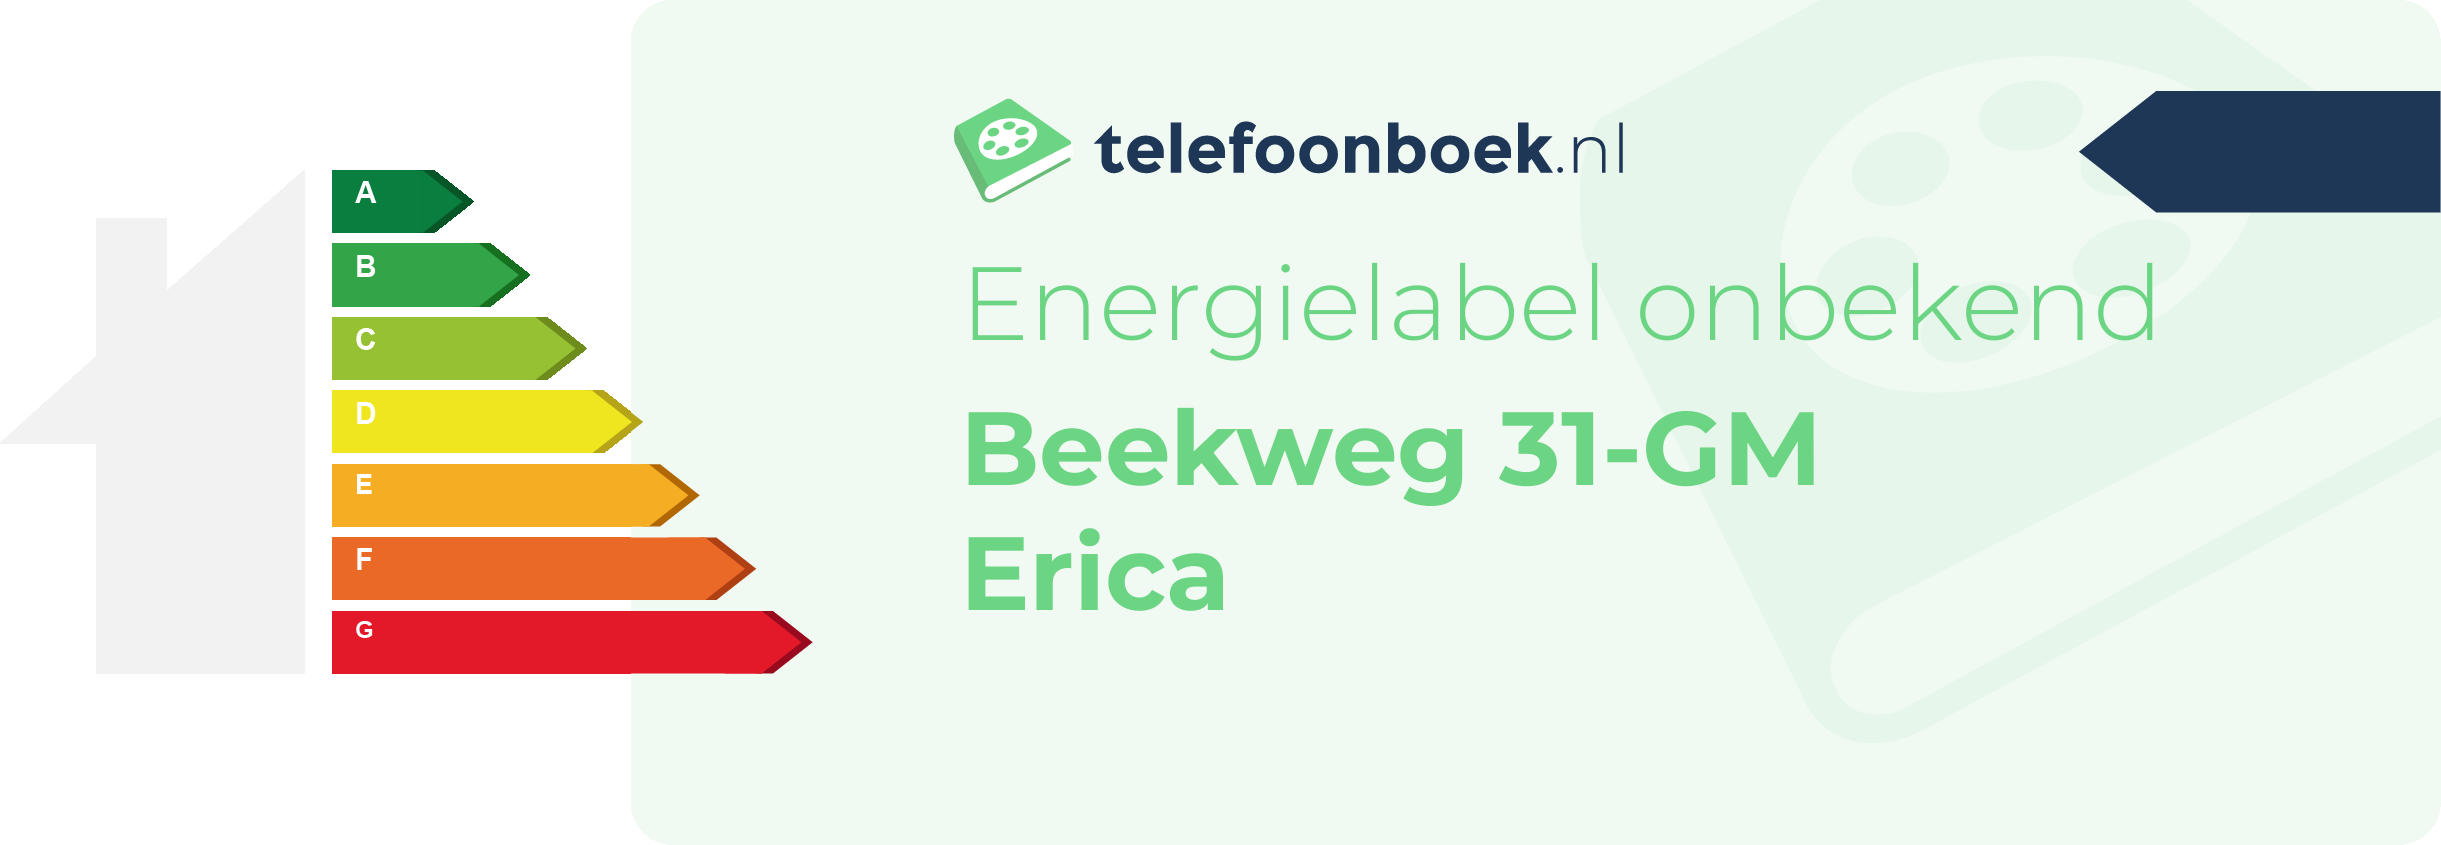 Energielabel Beekweg 31-GM Erica